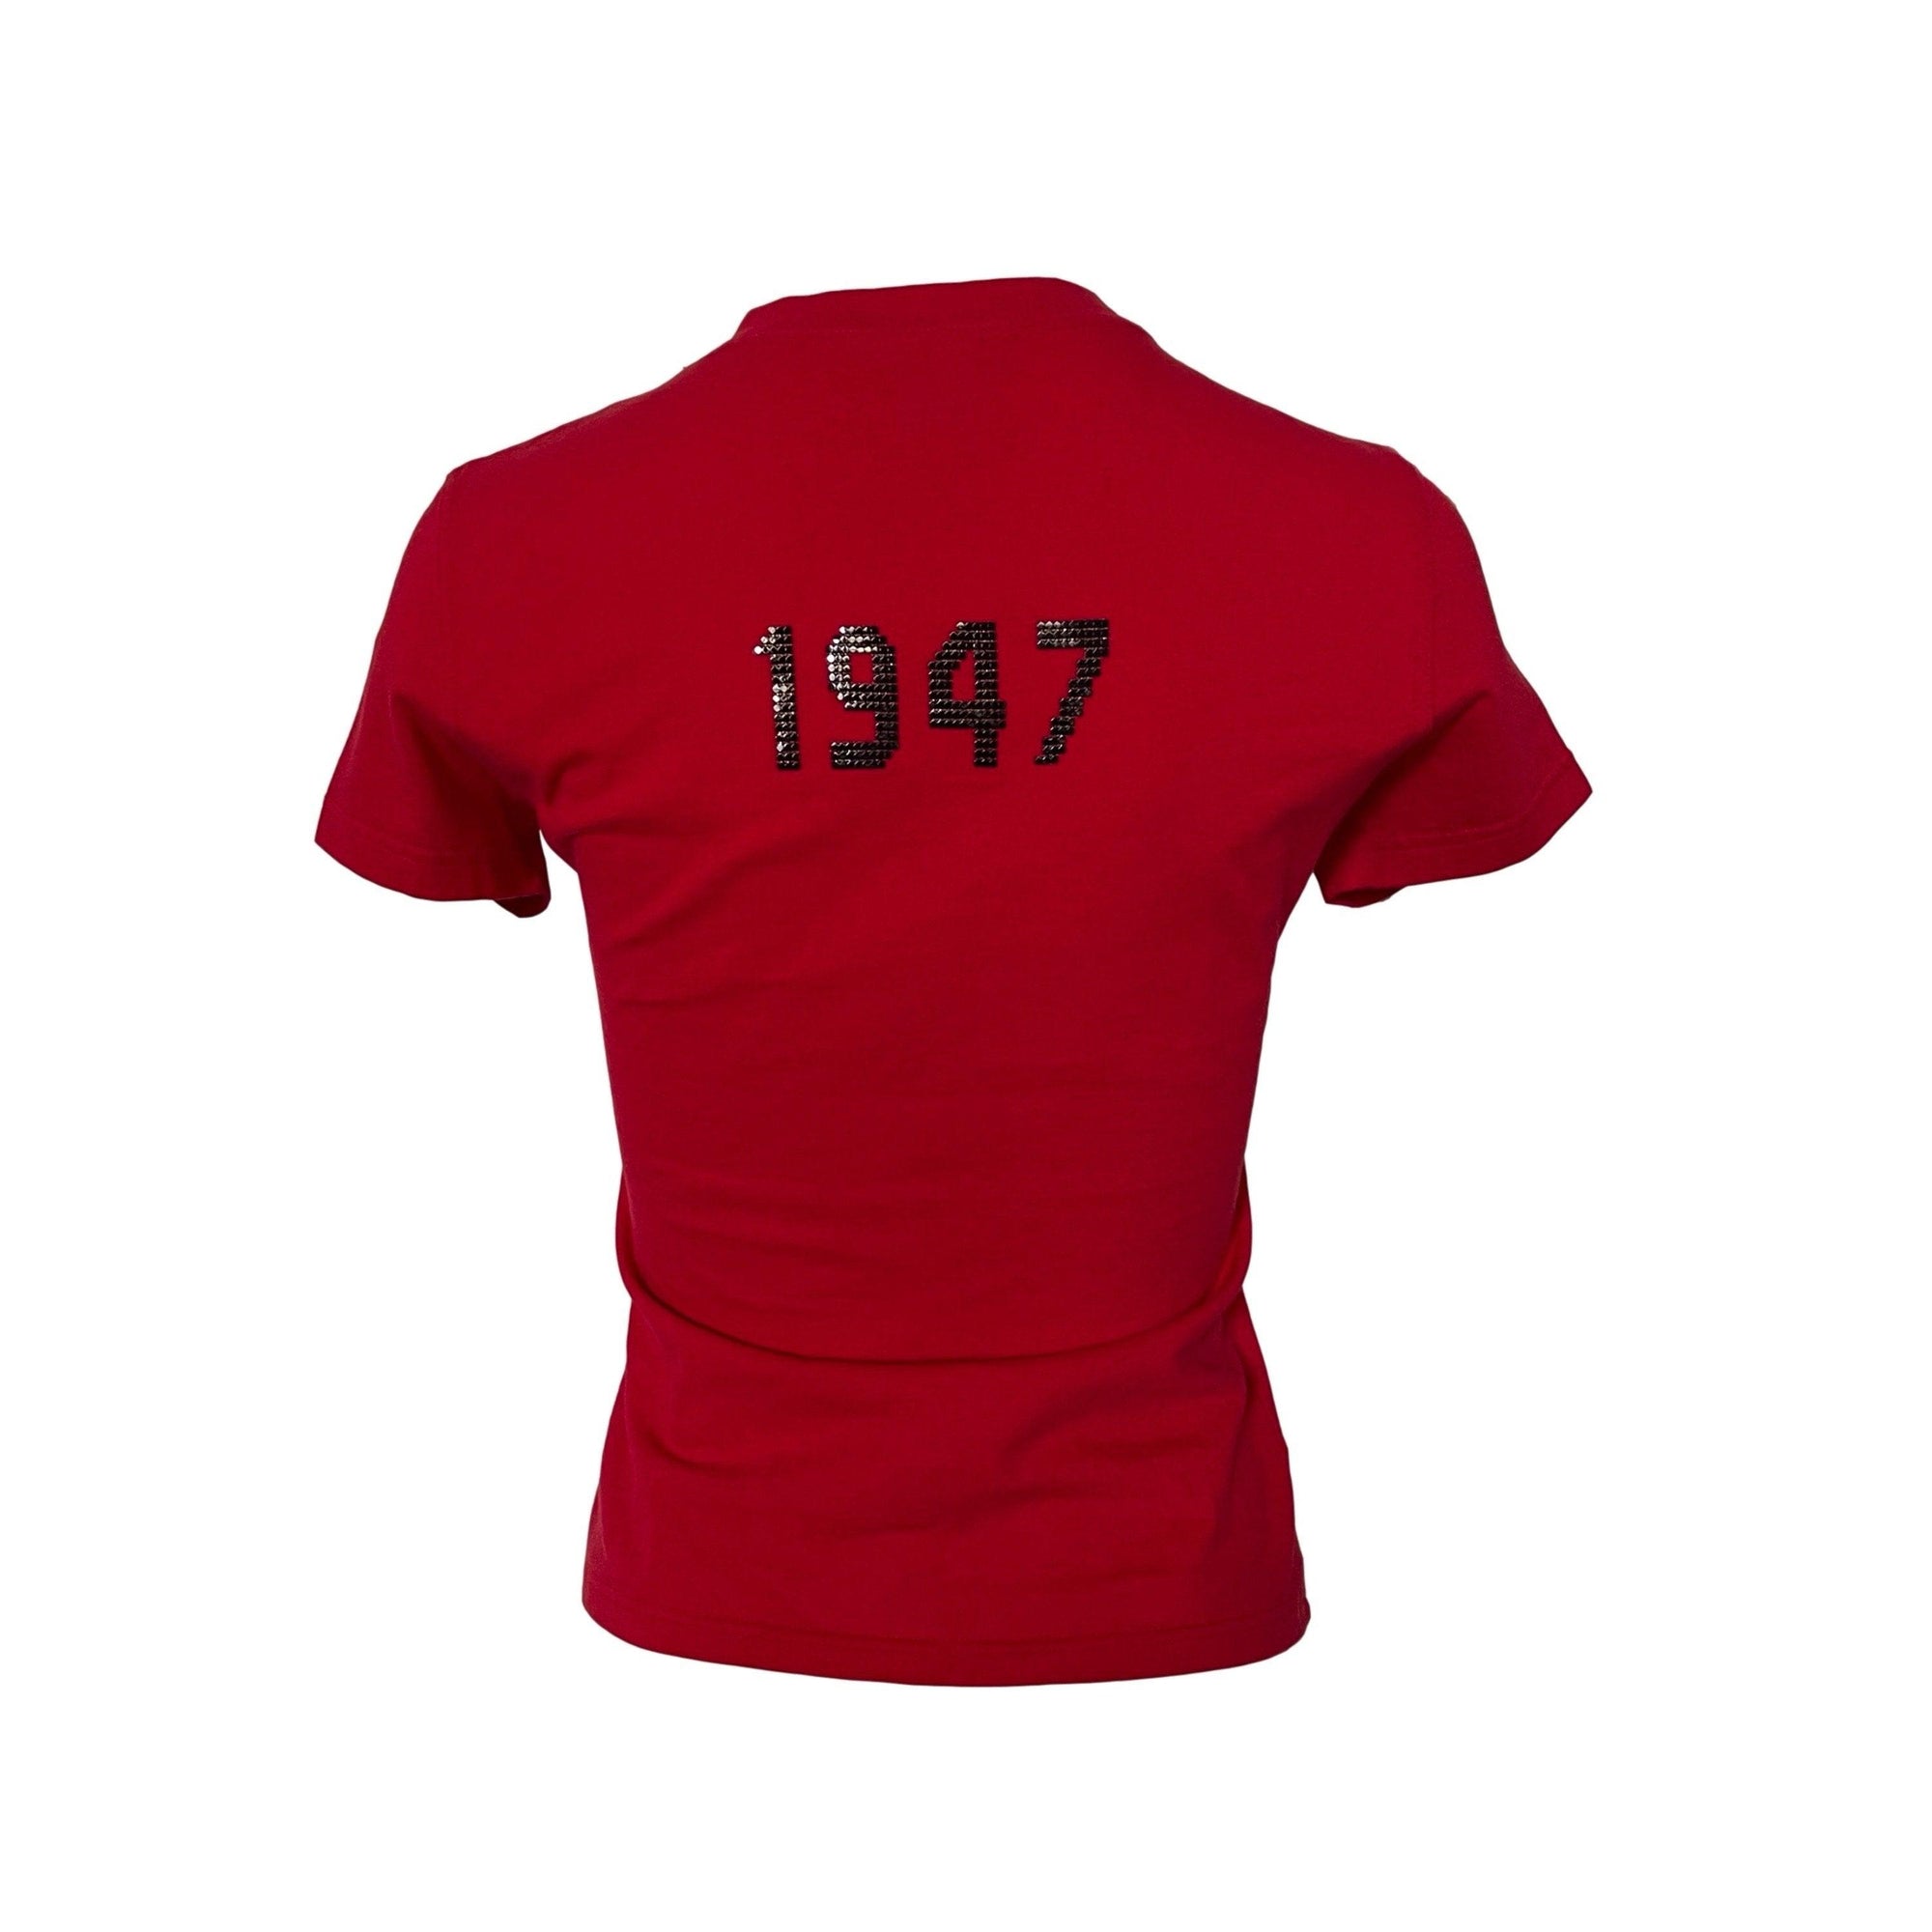 Dior J’Adore Red Black Studded T-Shirt - Apparel